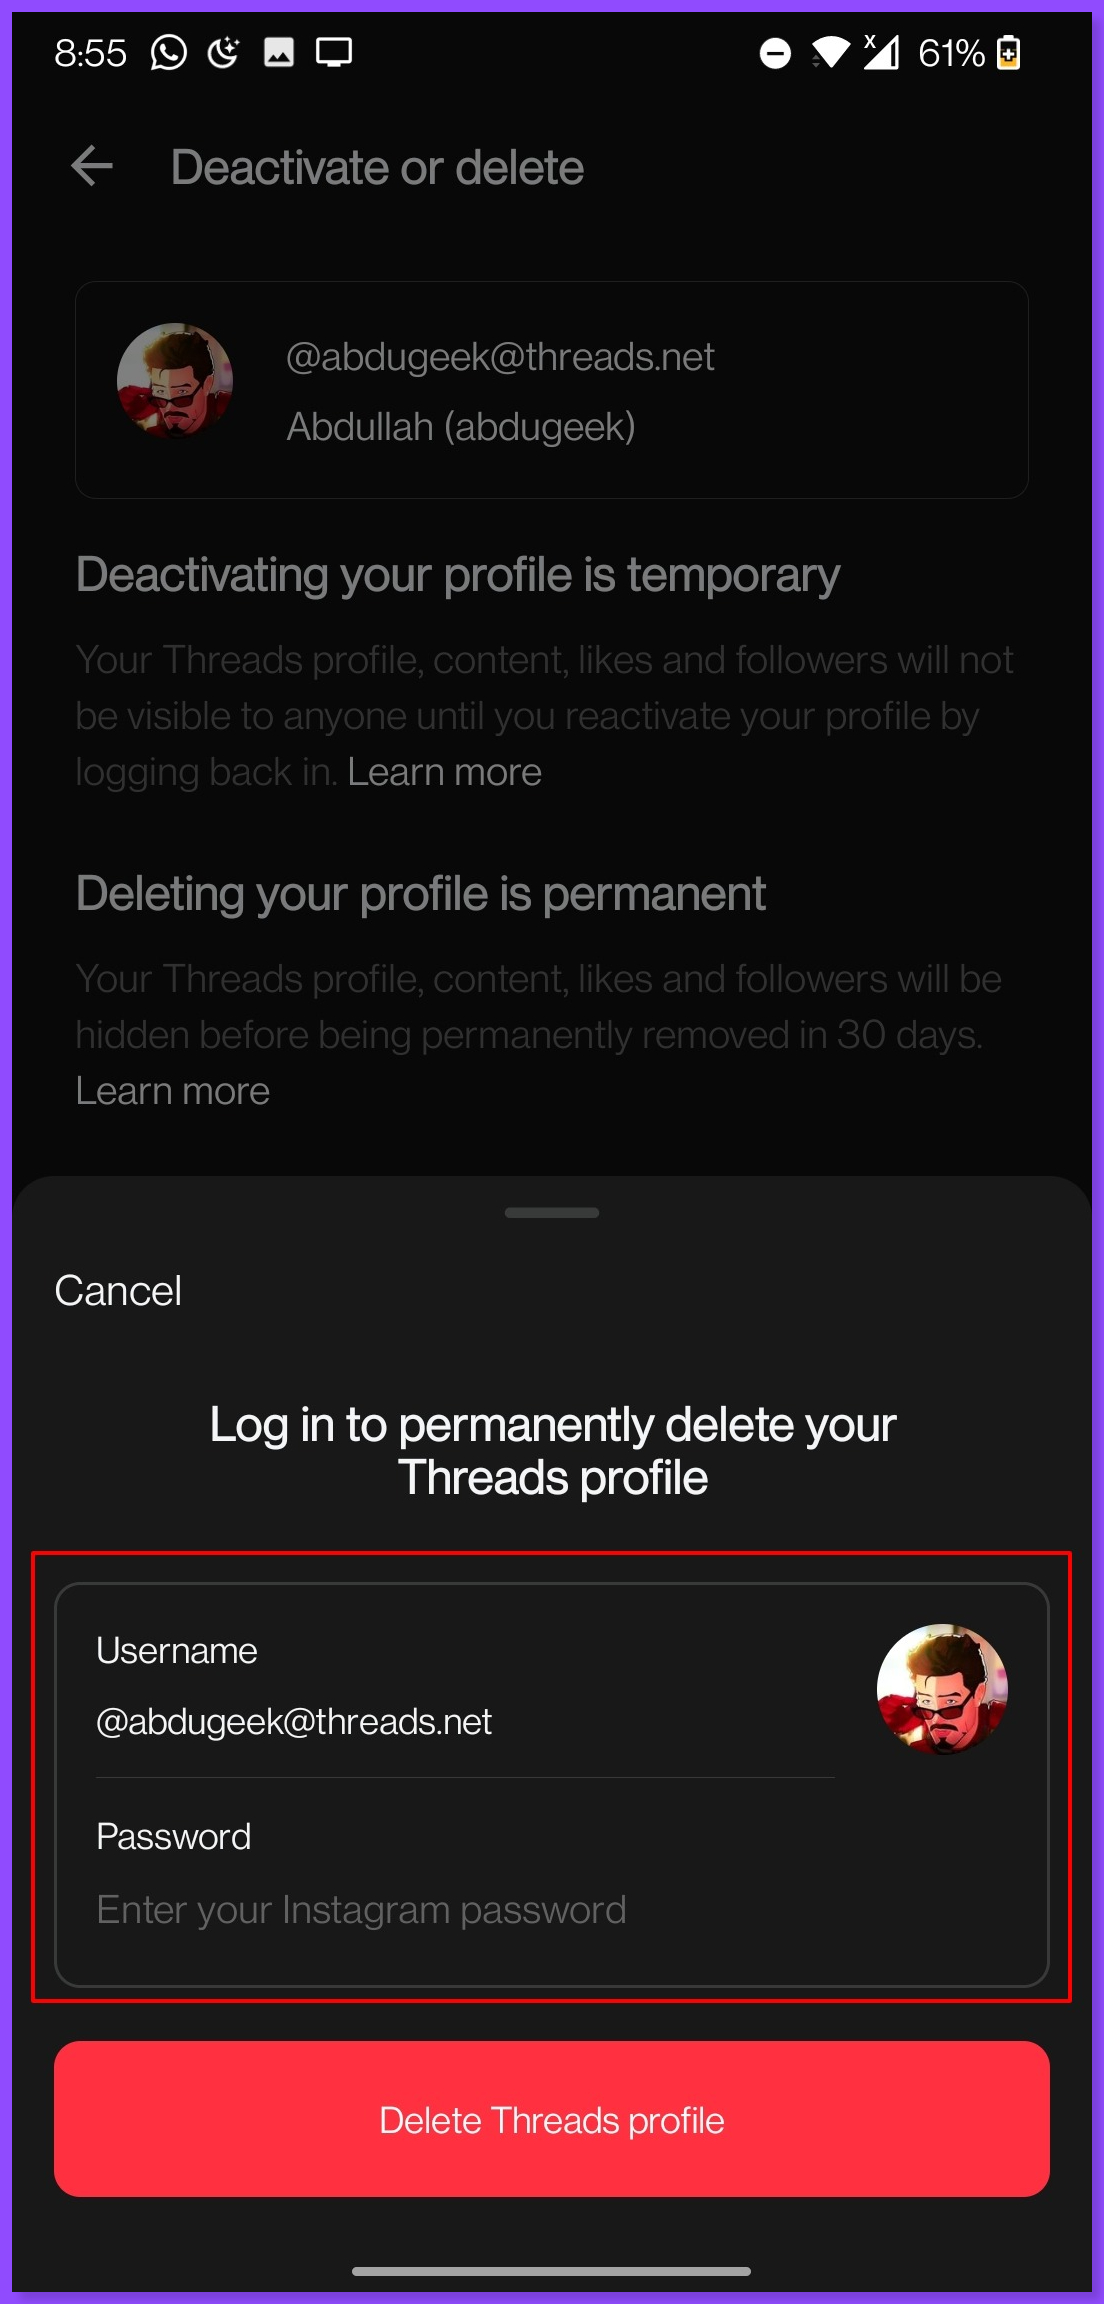 Enter password to delete your Threads profile